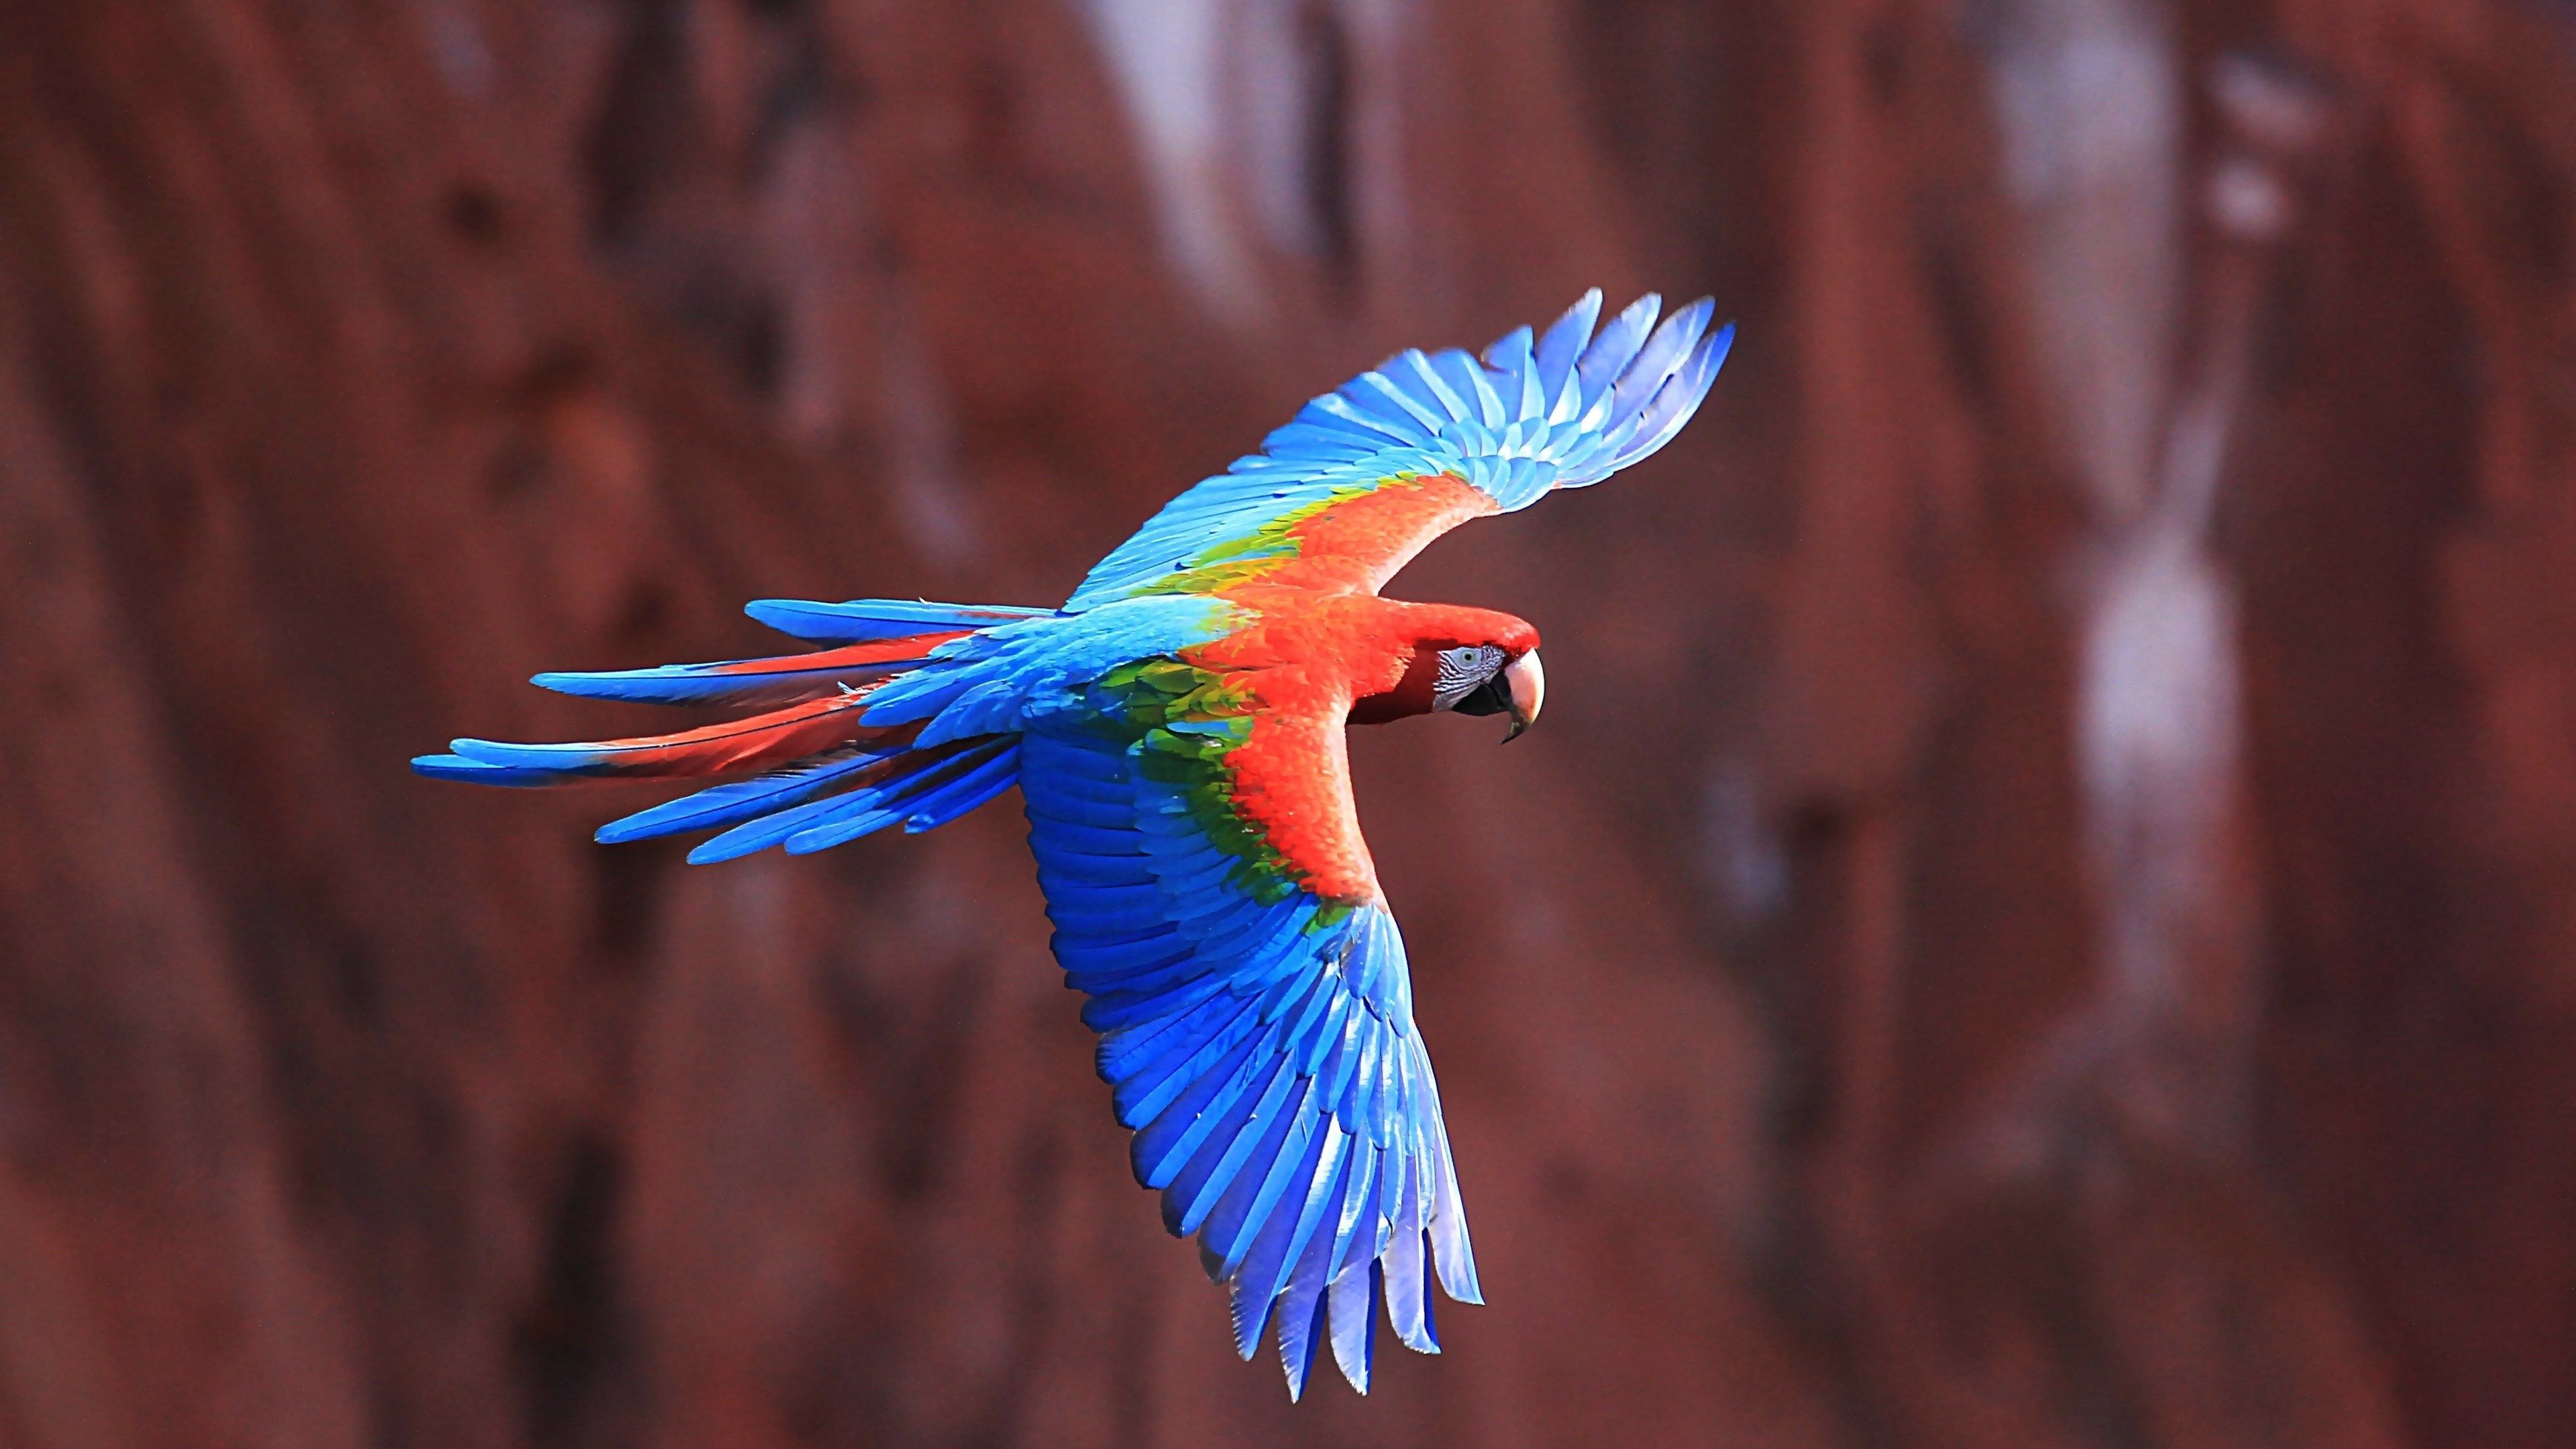 Birds wallpaper hd, Macaw parrot .com